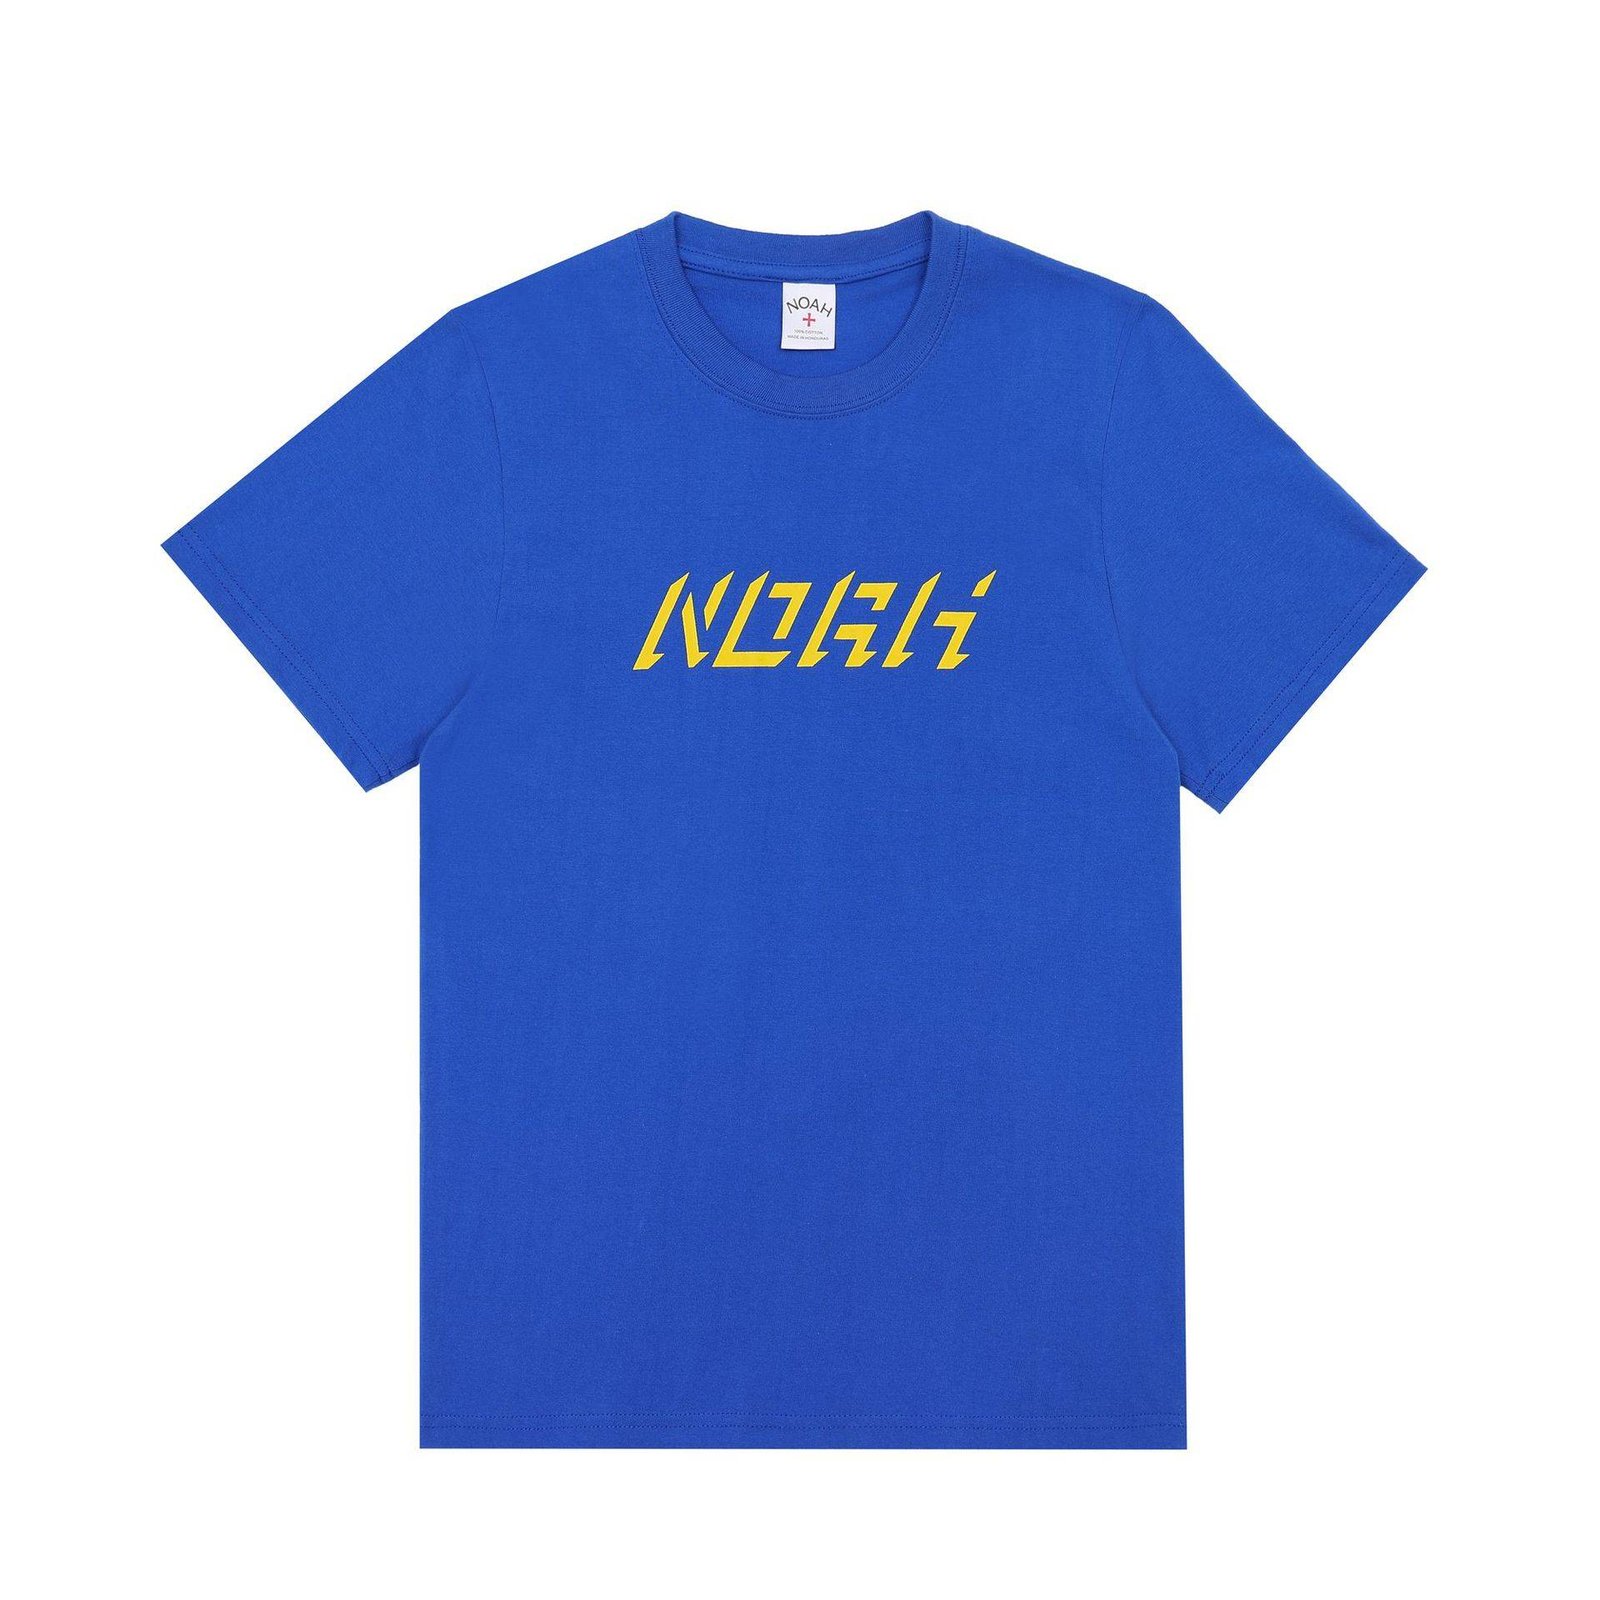 NOAH T-Shirt